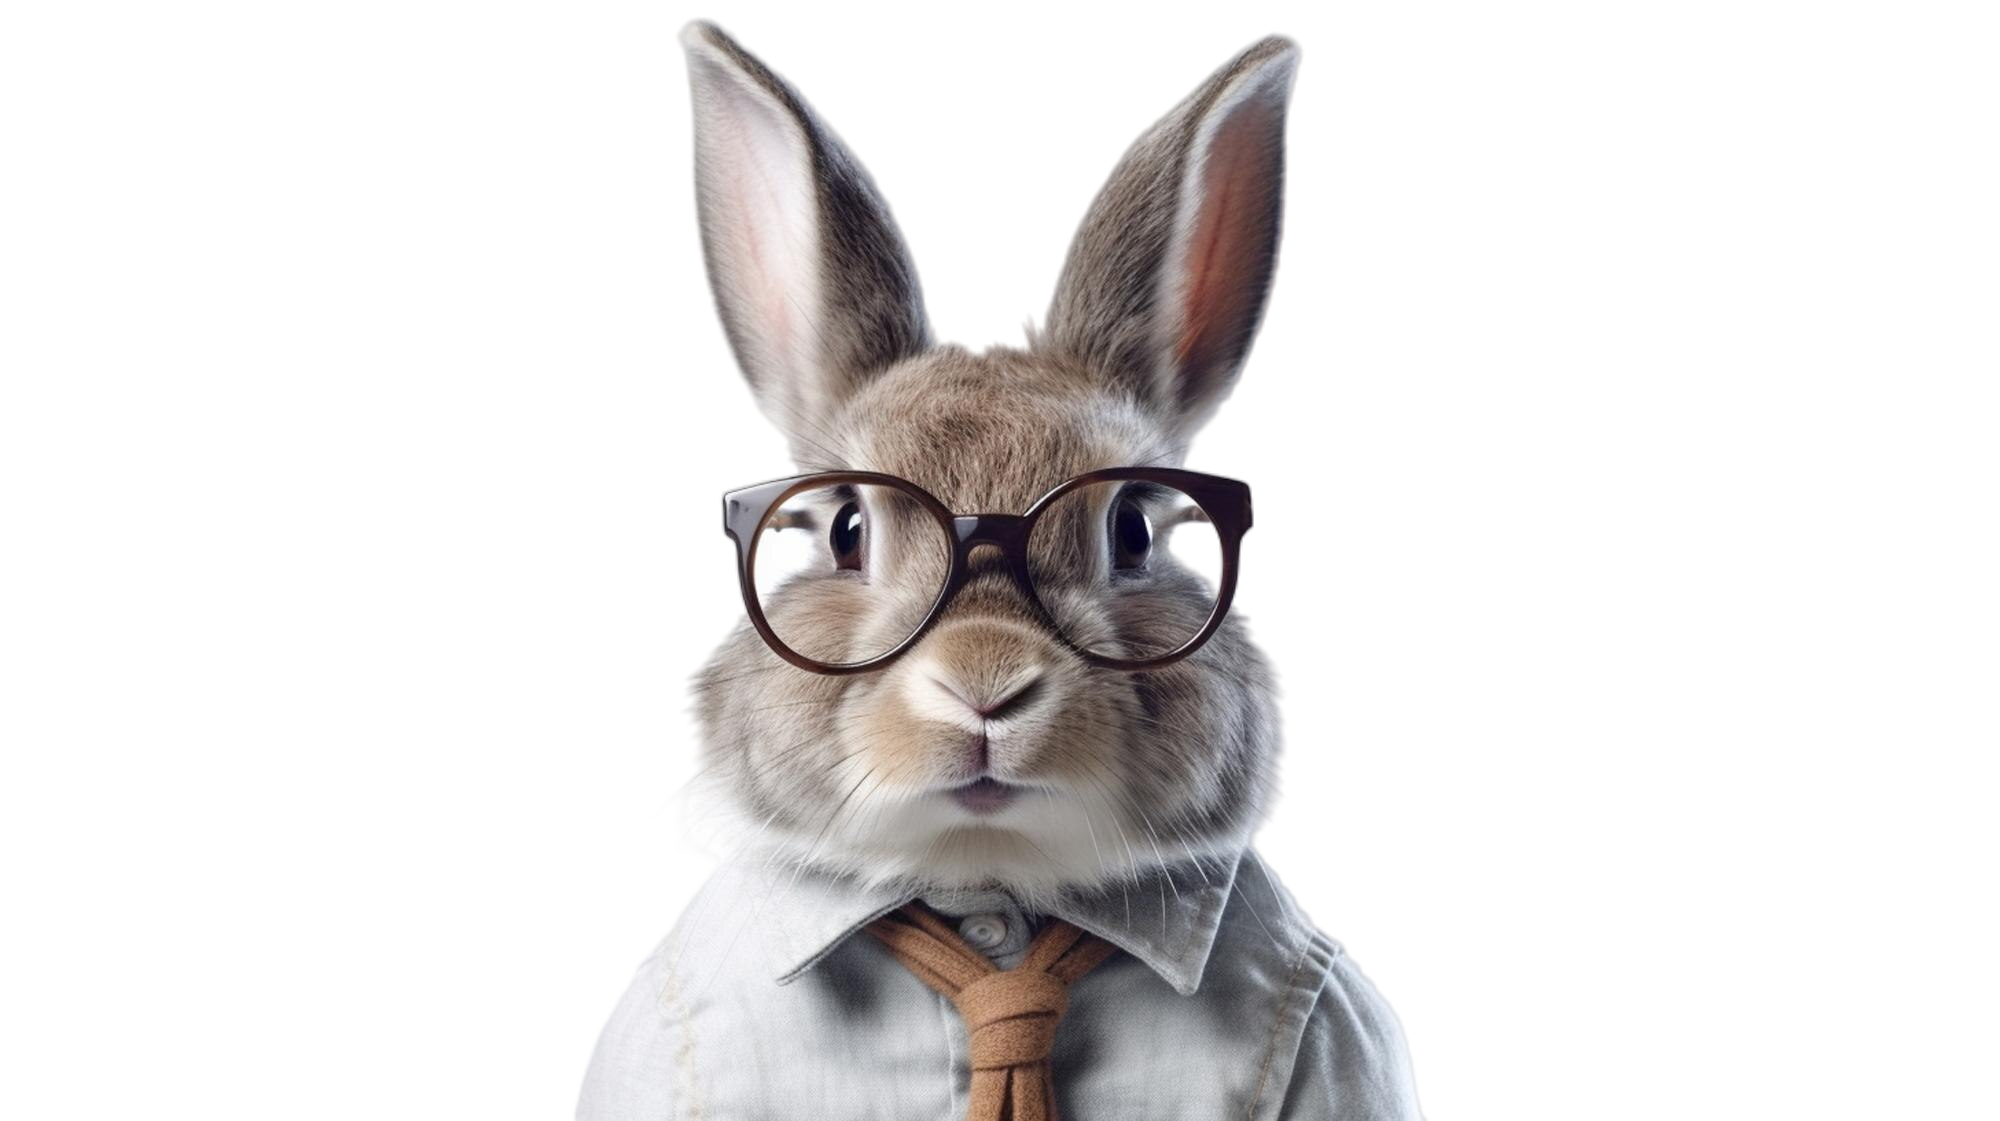 Rabbit wearing glasses